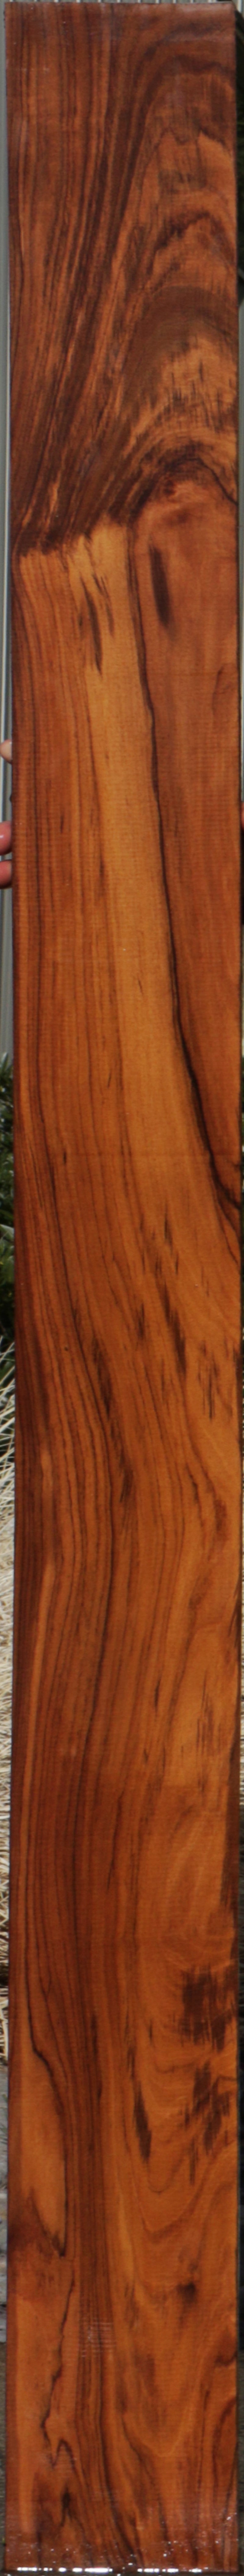 Extra Fancy Bolivian Rosewood Lumber